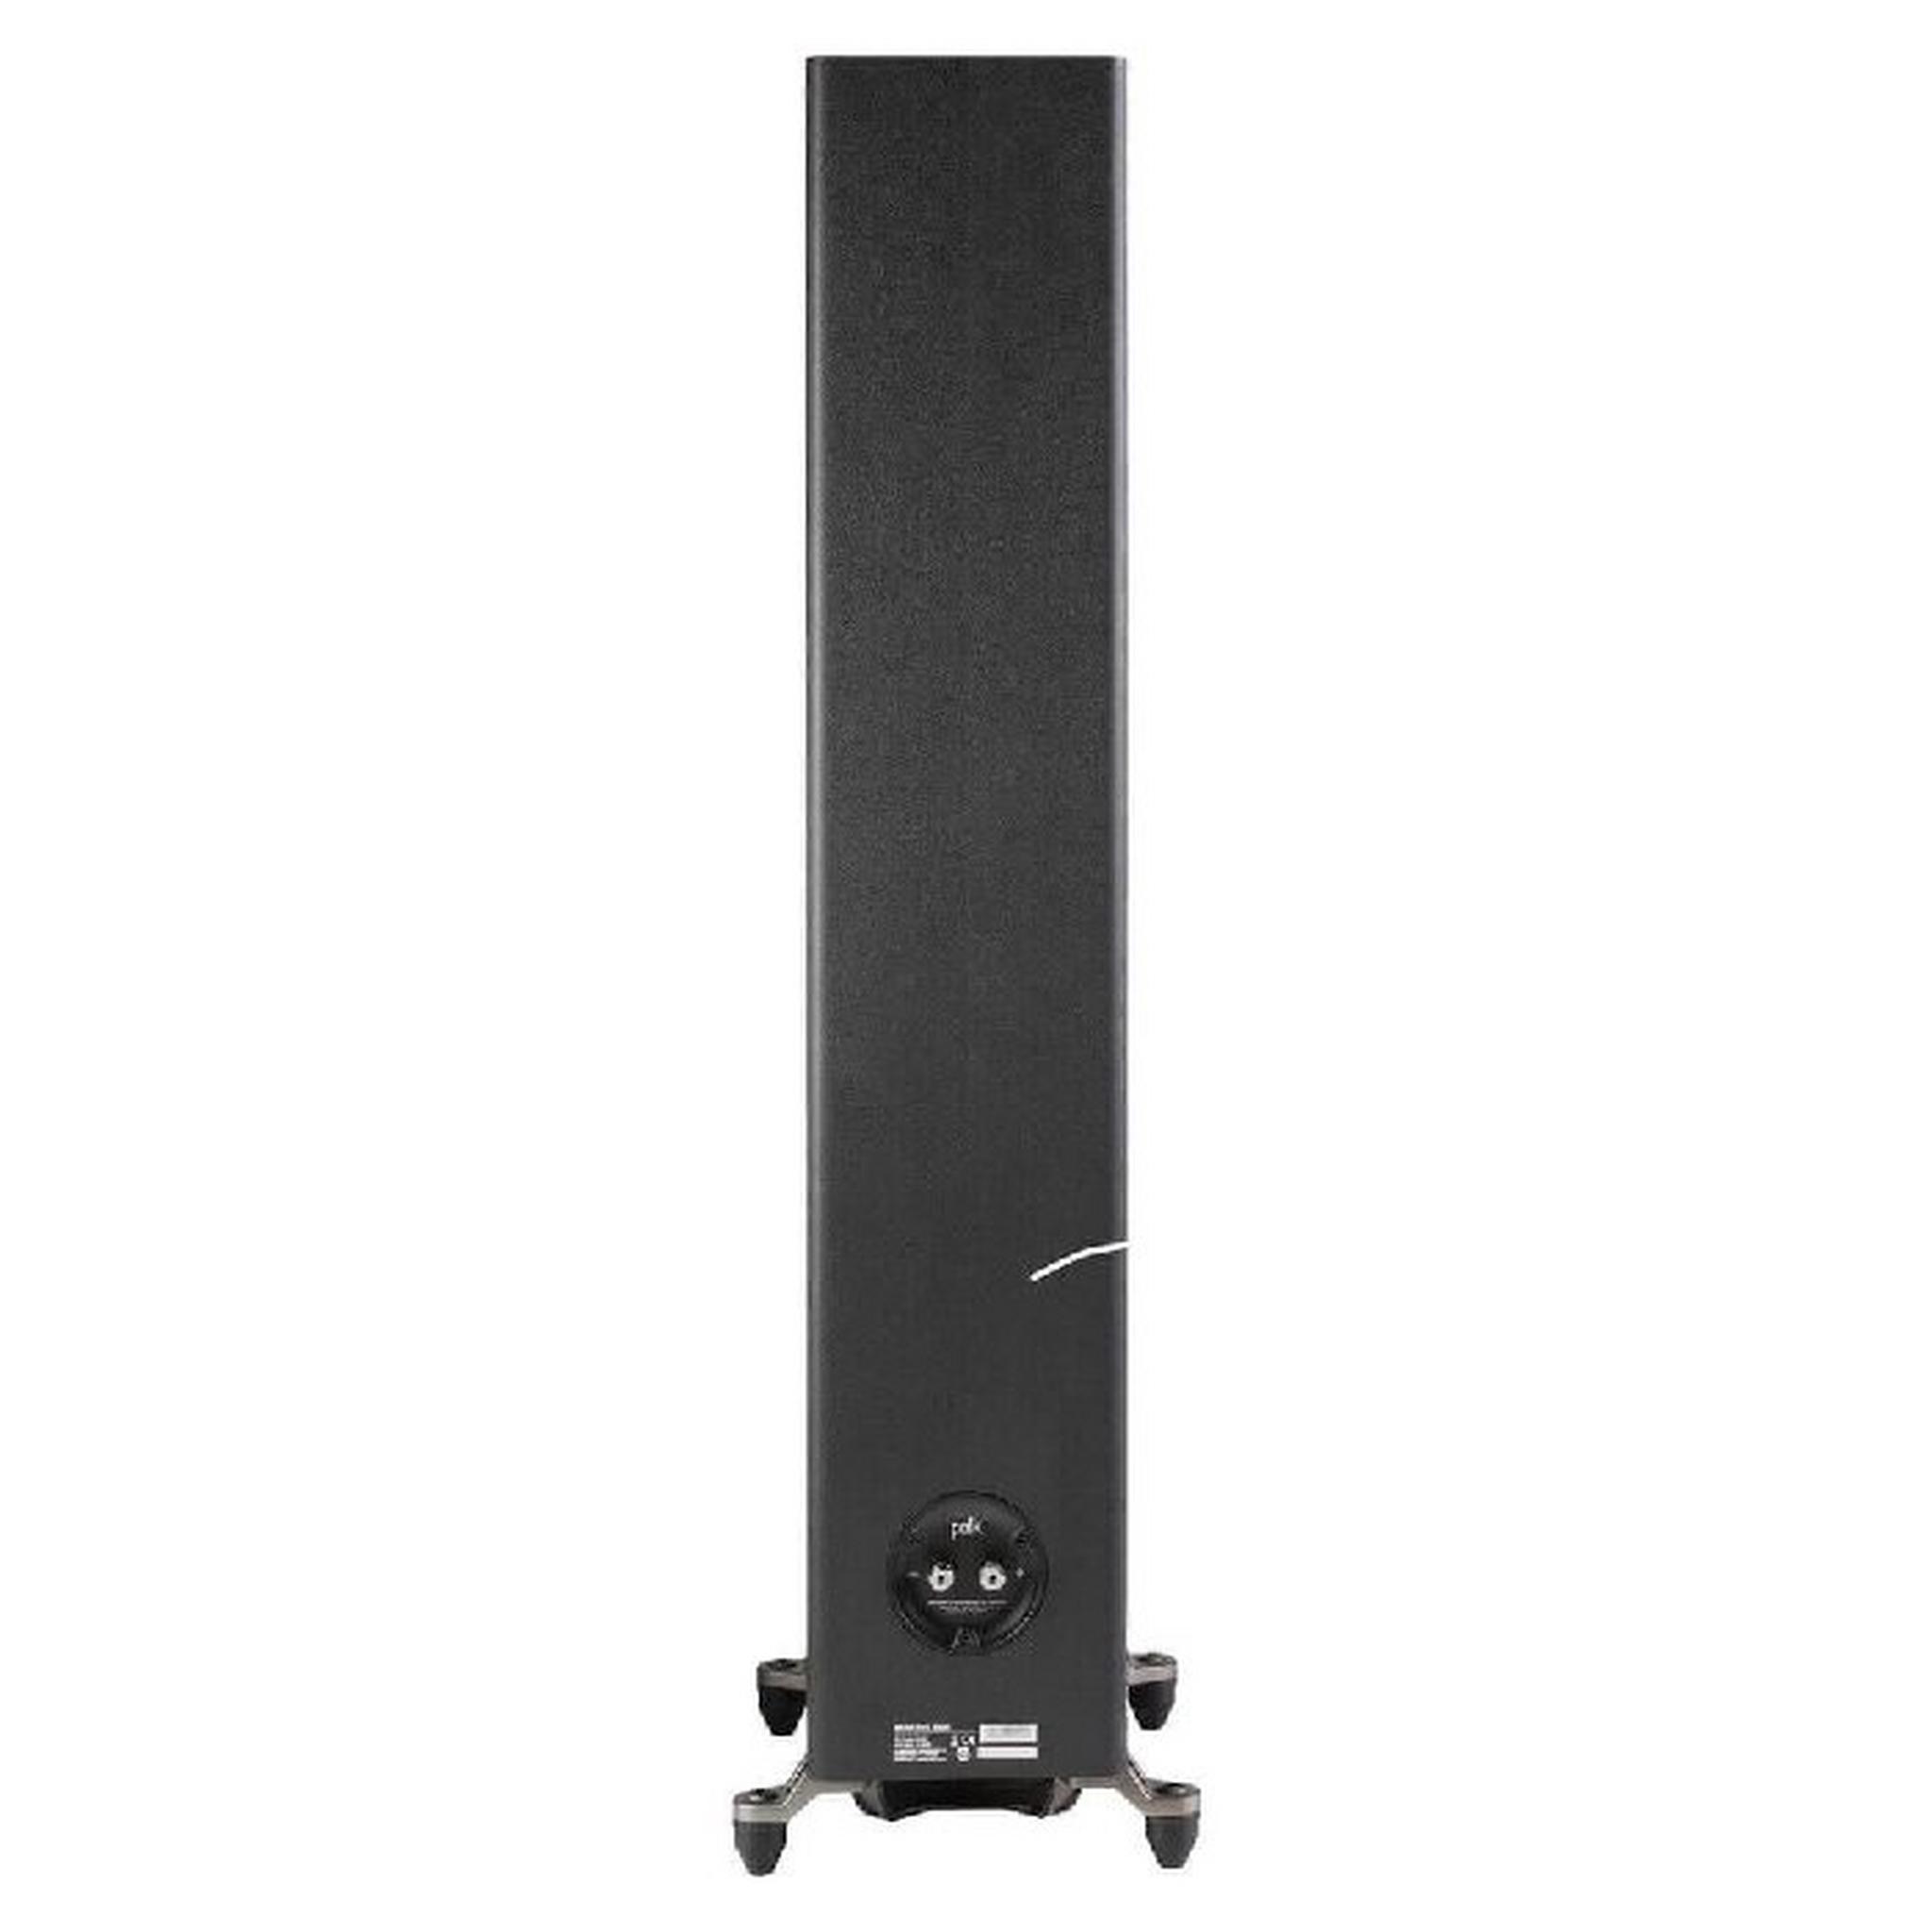 Polk Audio Reserve R600 200W Floor Standing Speaker - Black